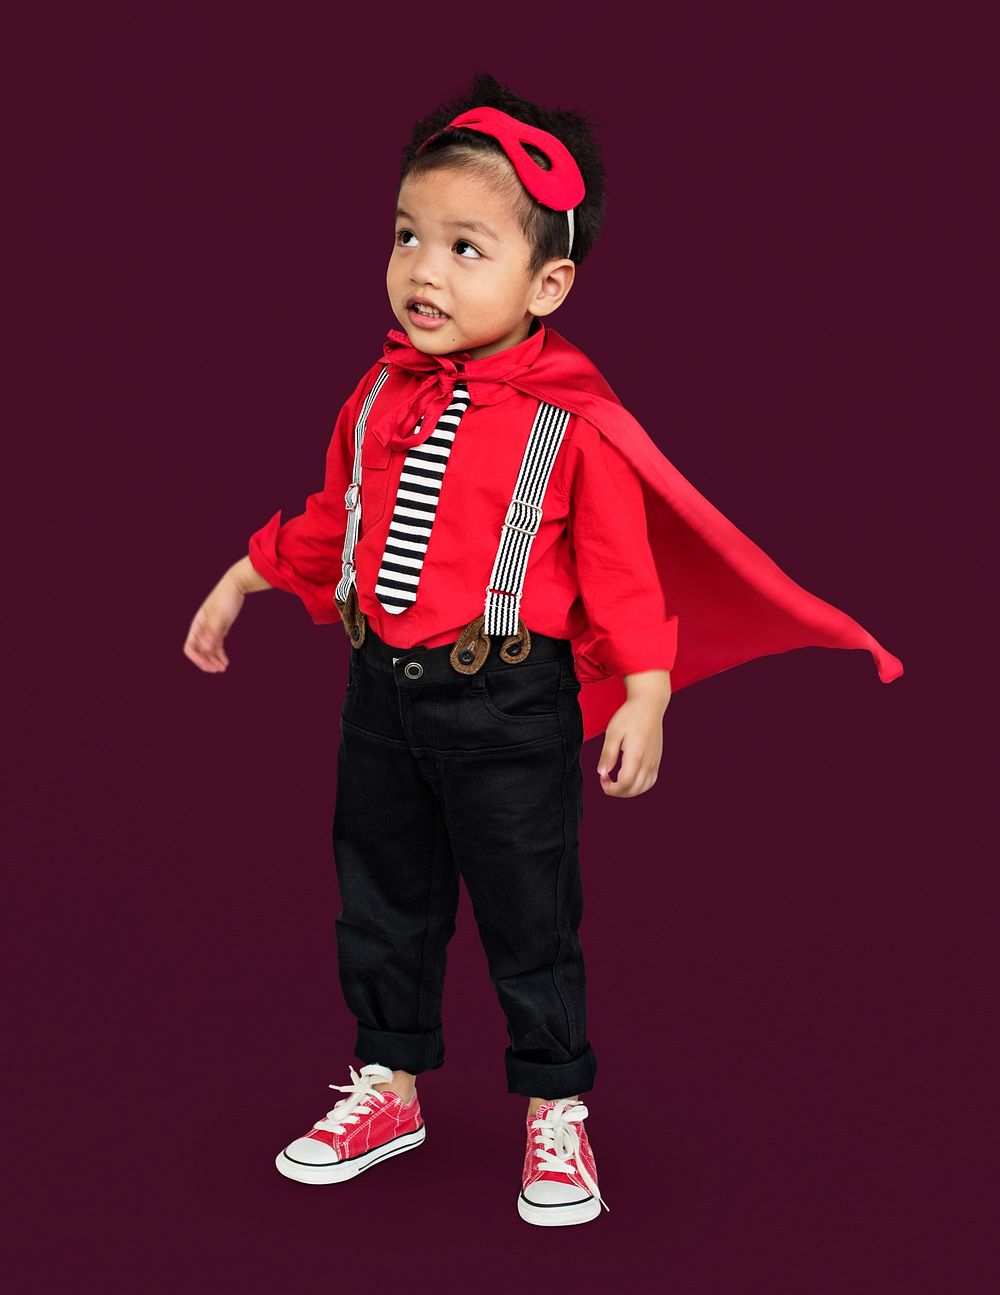 Full body portrait of a little boy in a casual superhero costume